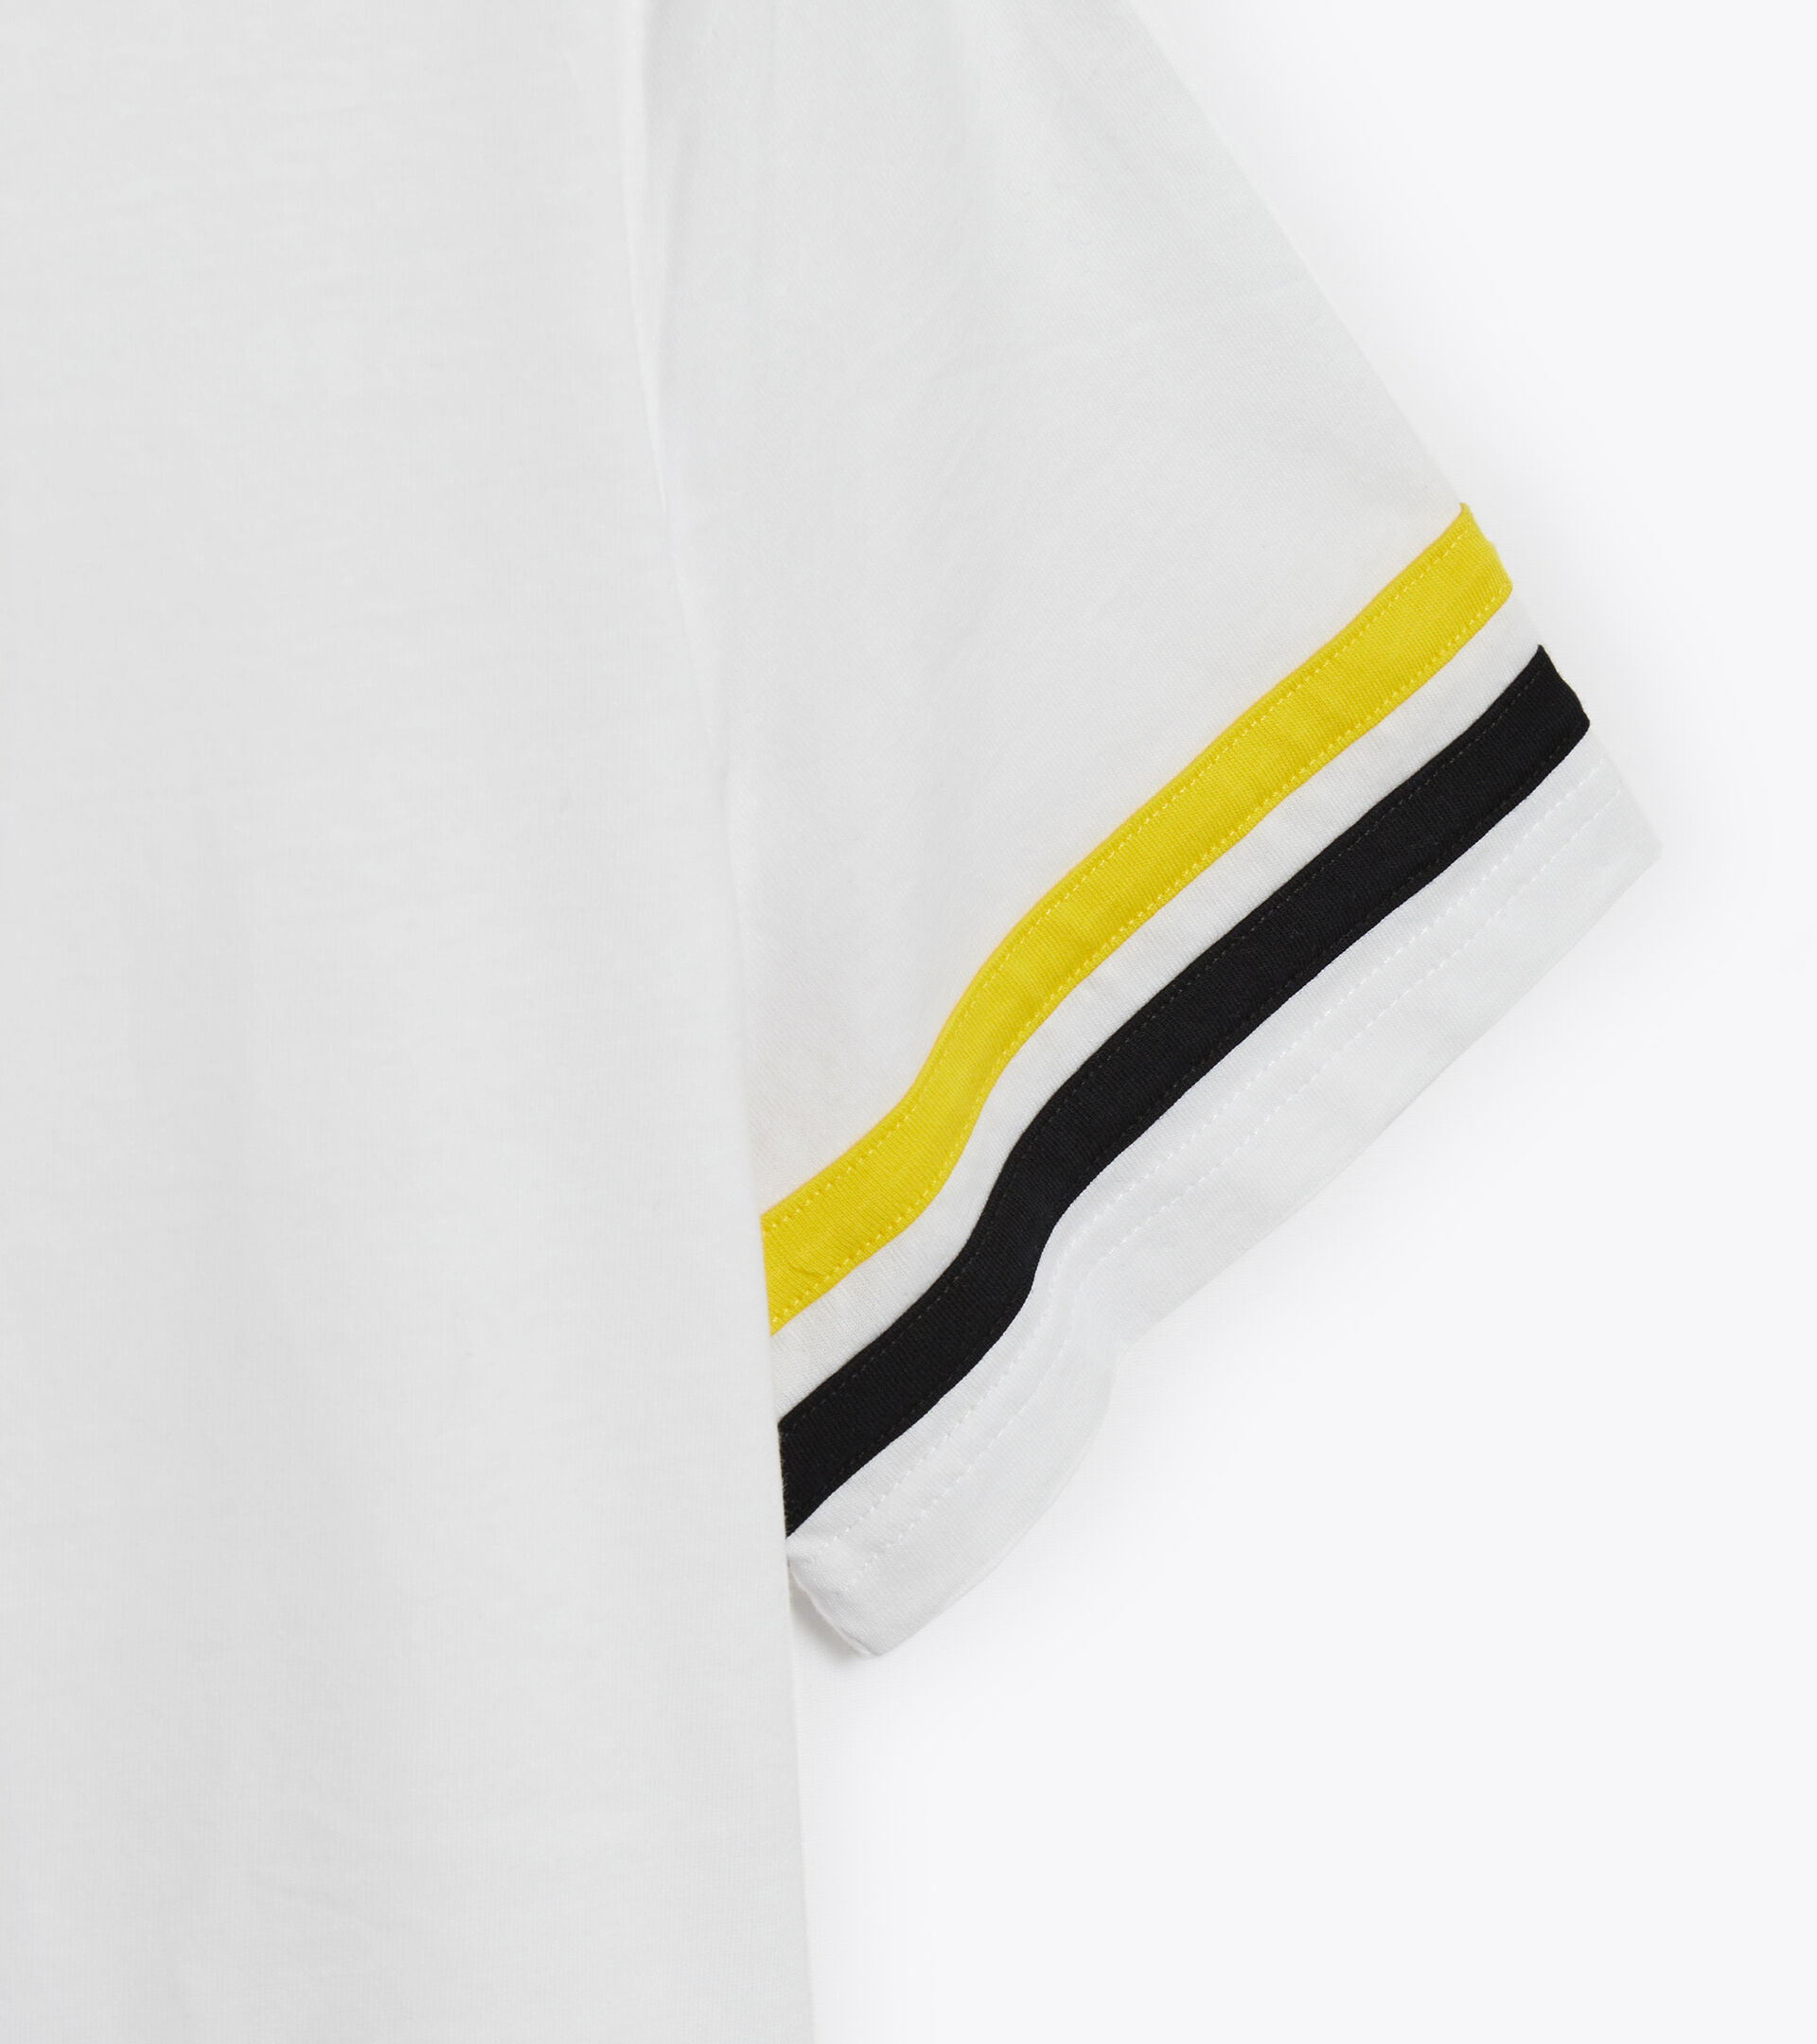 Cotton t-shirt - Men T-SHIRT SS SLAM OPTICAL WHITE - Diadora